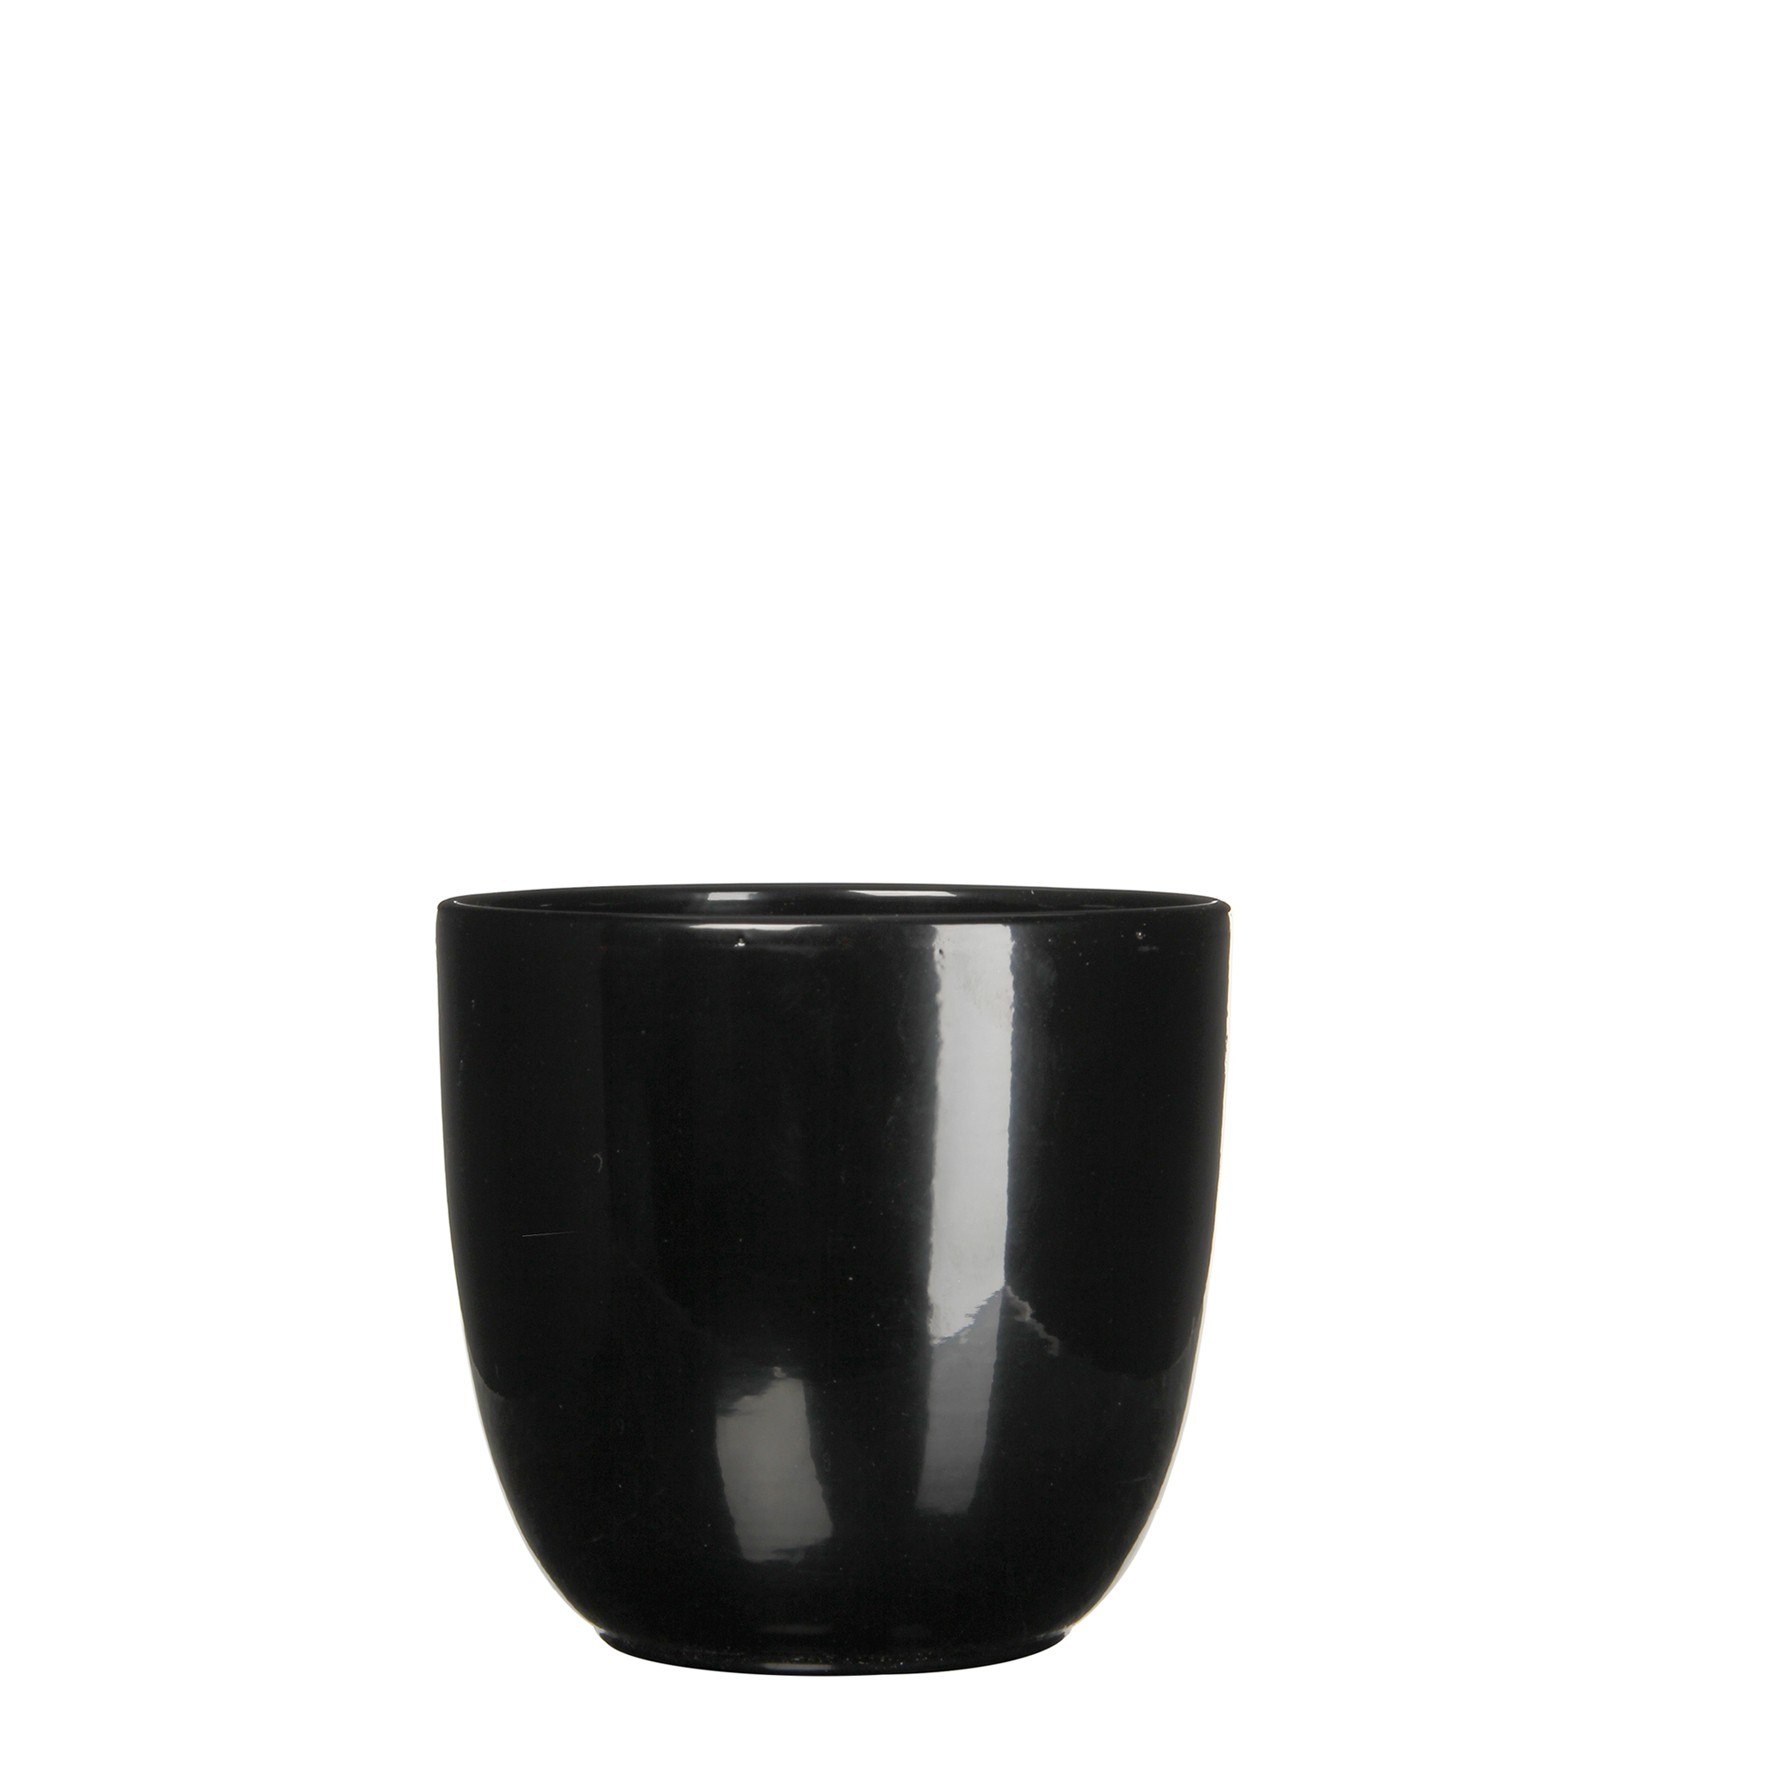 Bloempot Pot rond es 15 tusca 16 x 17 cm zwart Mica Mica Decorations